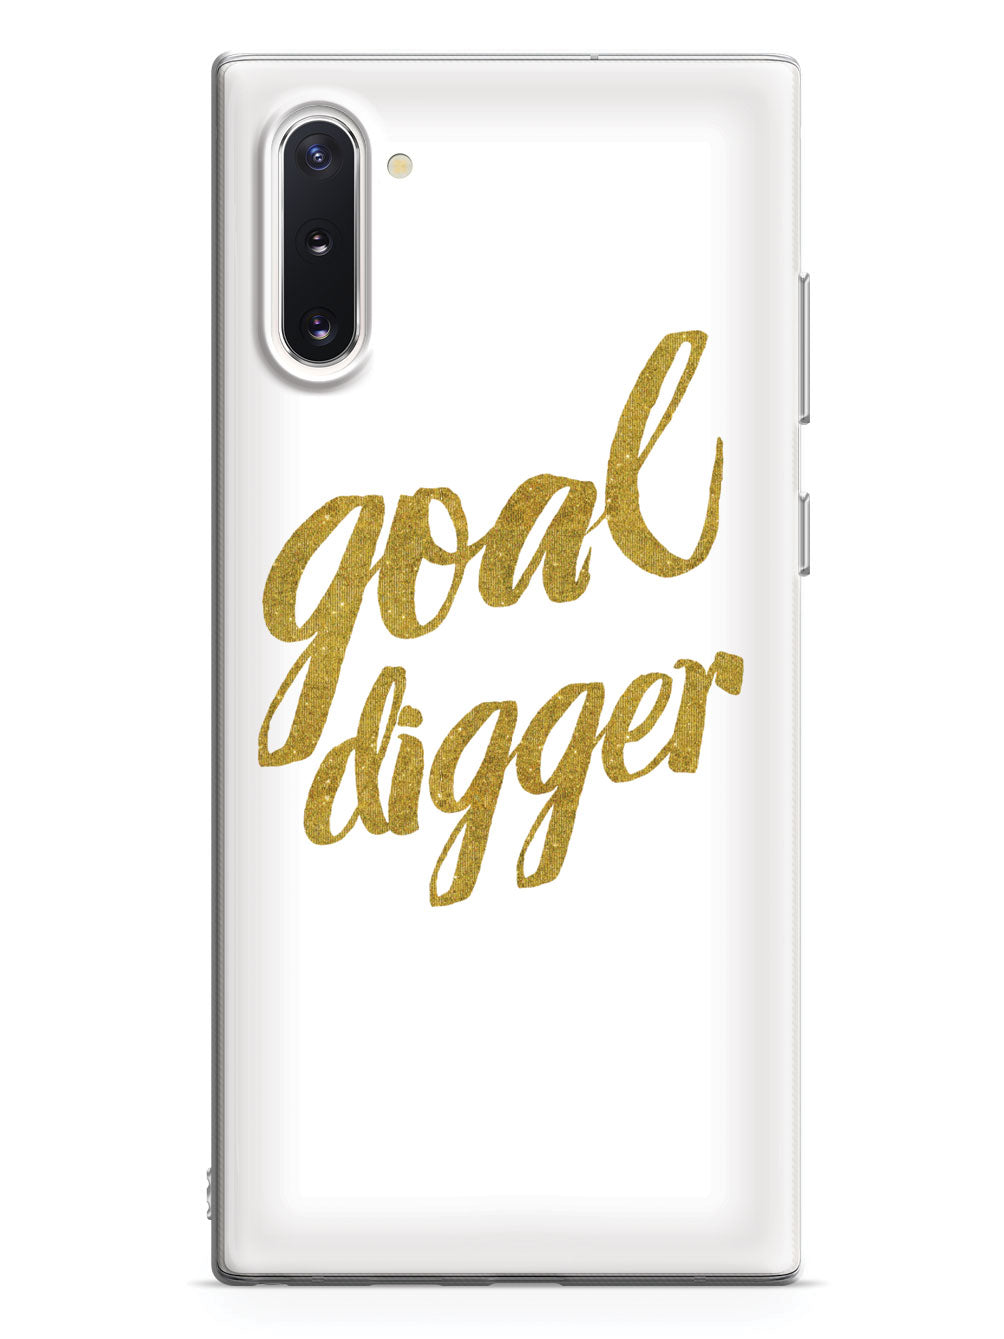 Goal Digger Case